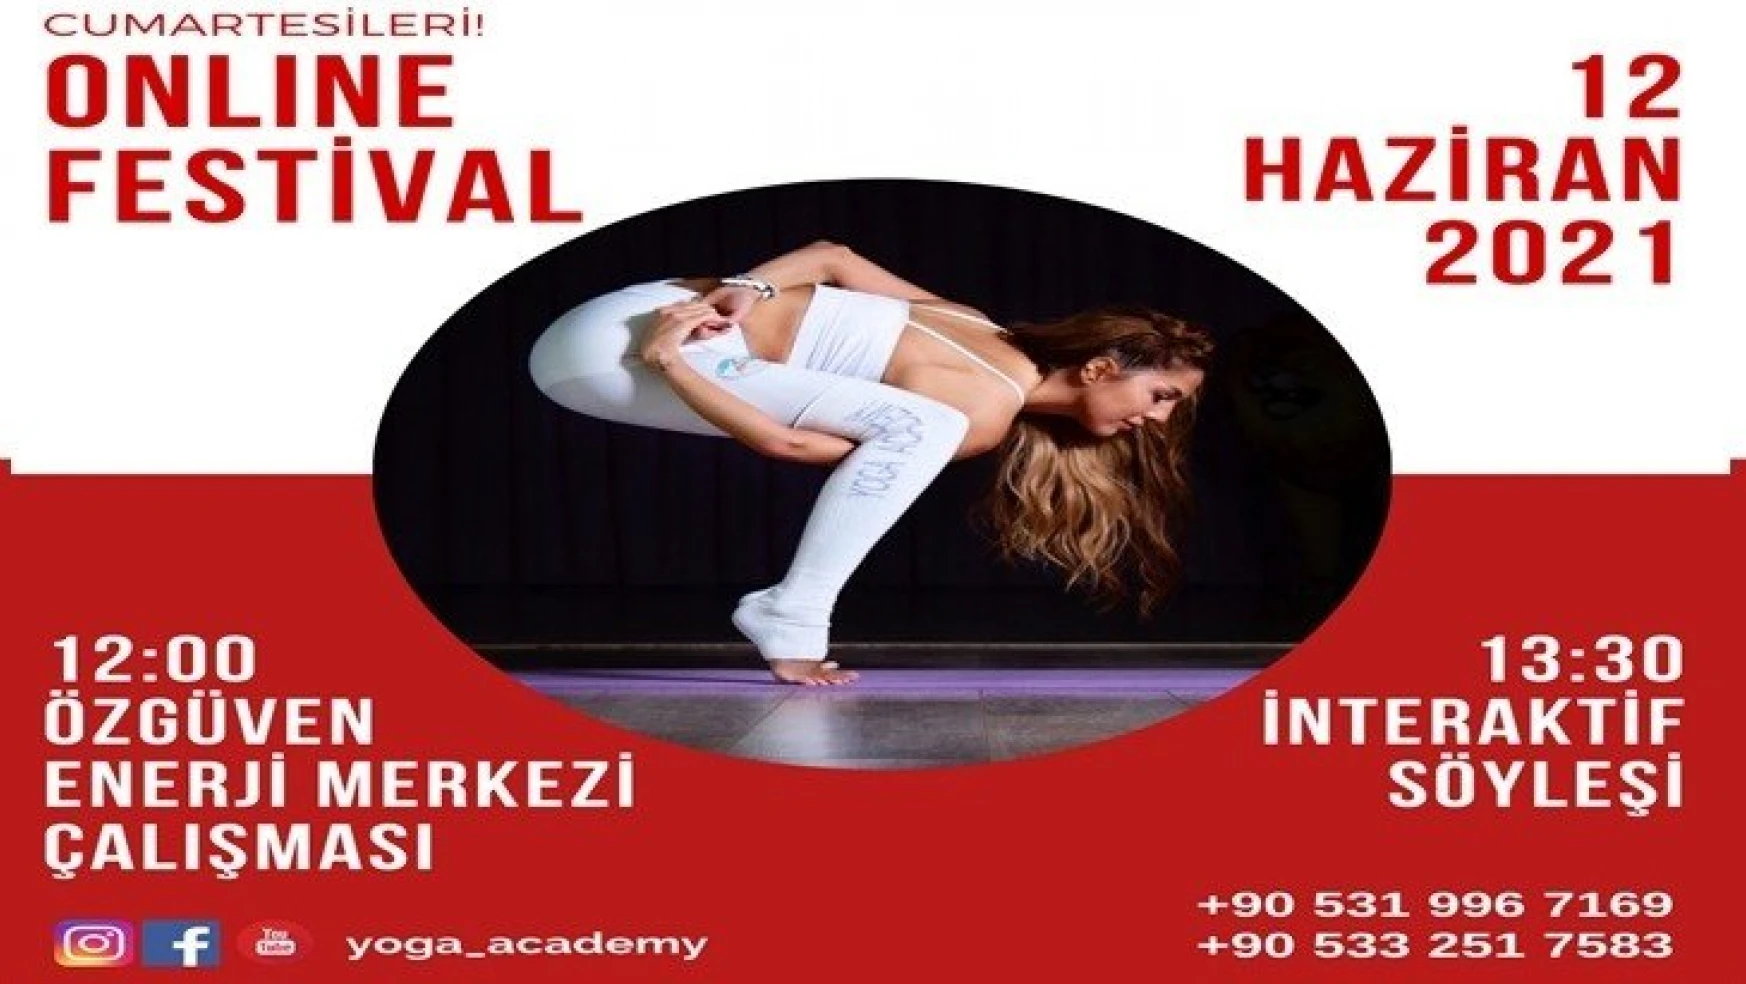 Covıd-19'a Karşı En Etkili Festival!